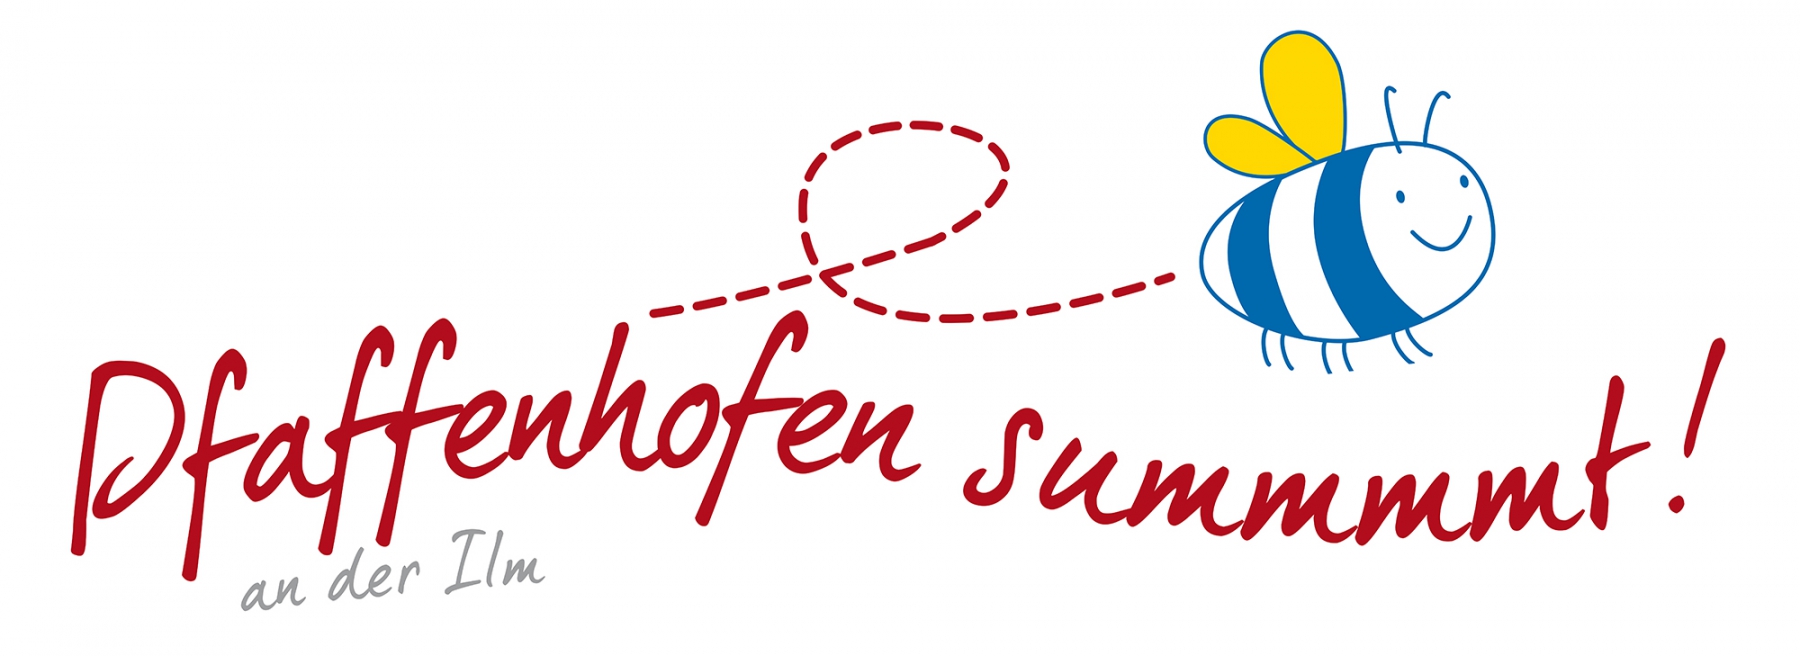 Pfaffenhofen summt! Logo